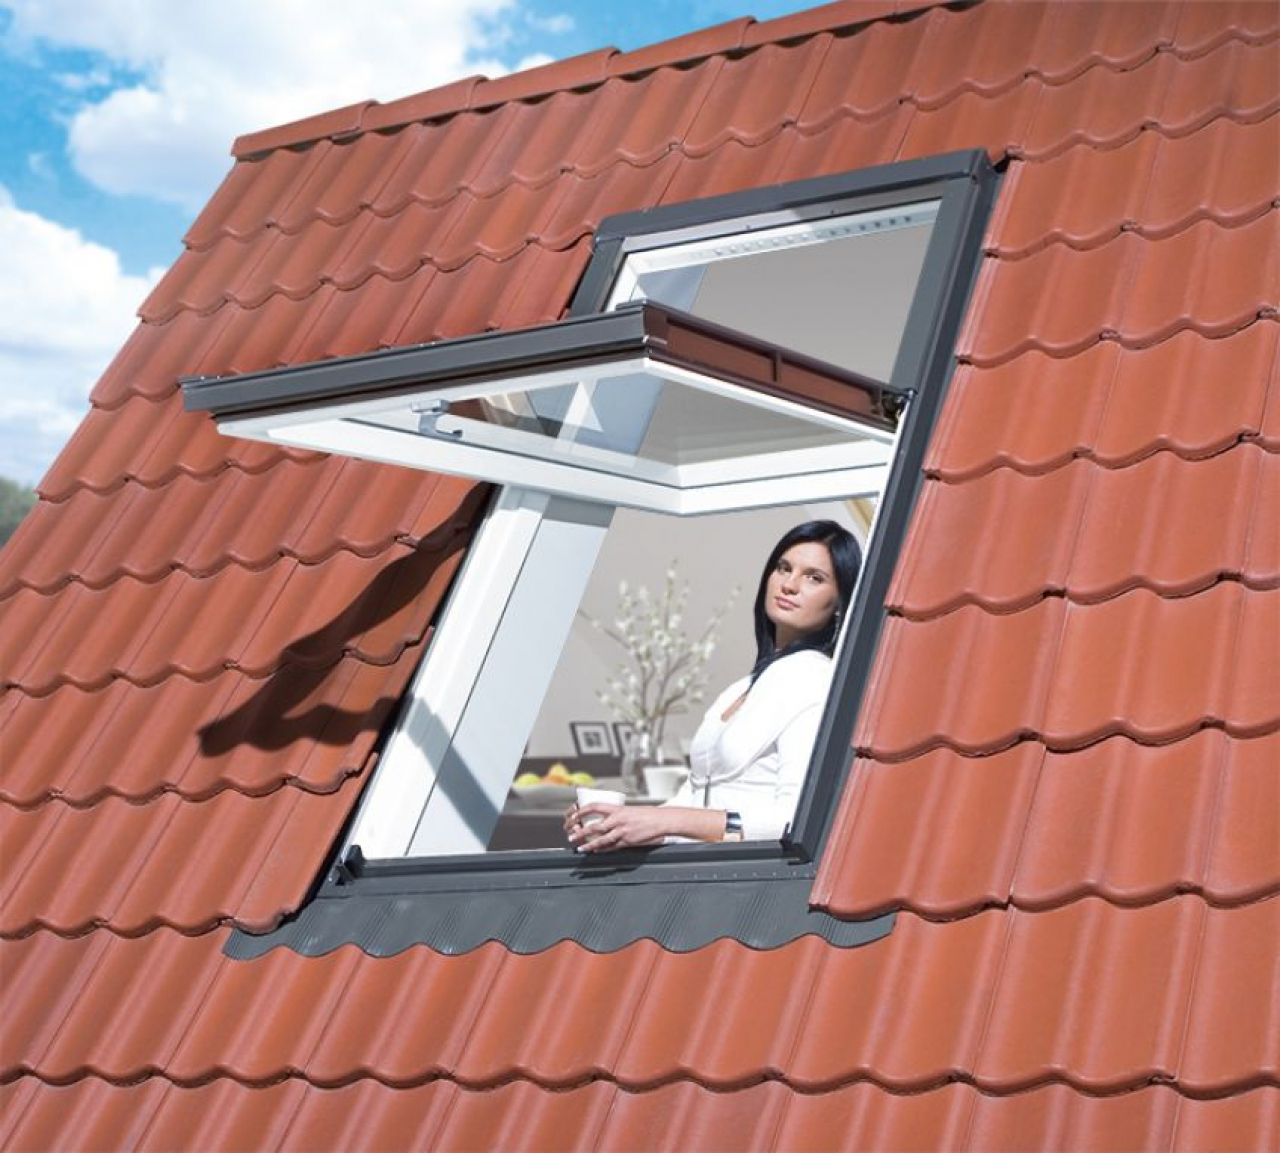 Fakro FYU-V U5 proSky Megemelt forgástengelyű tetőtéri ablakok